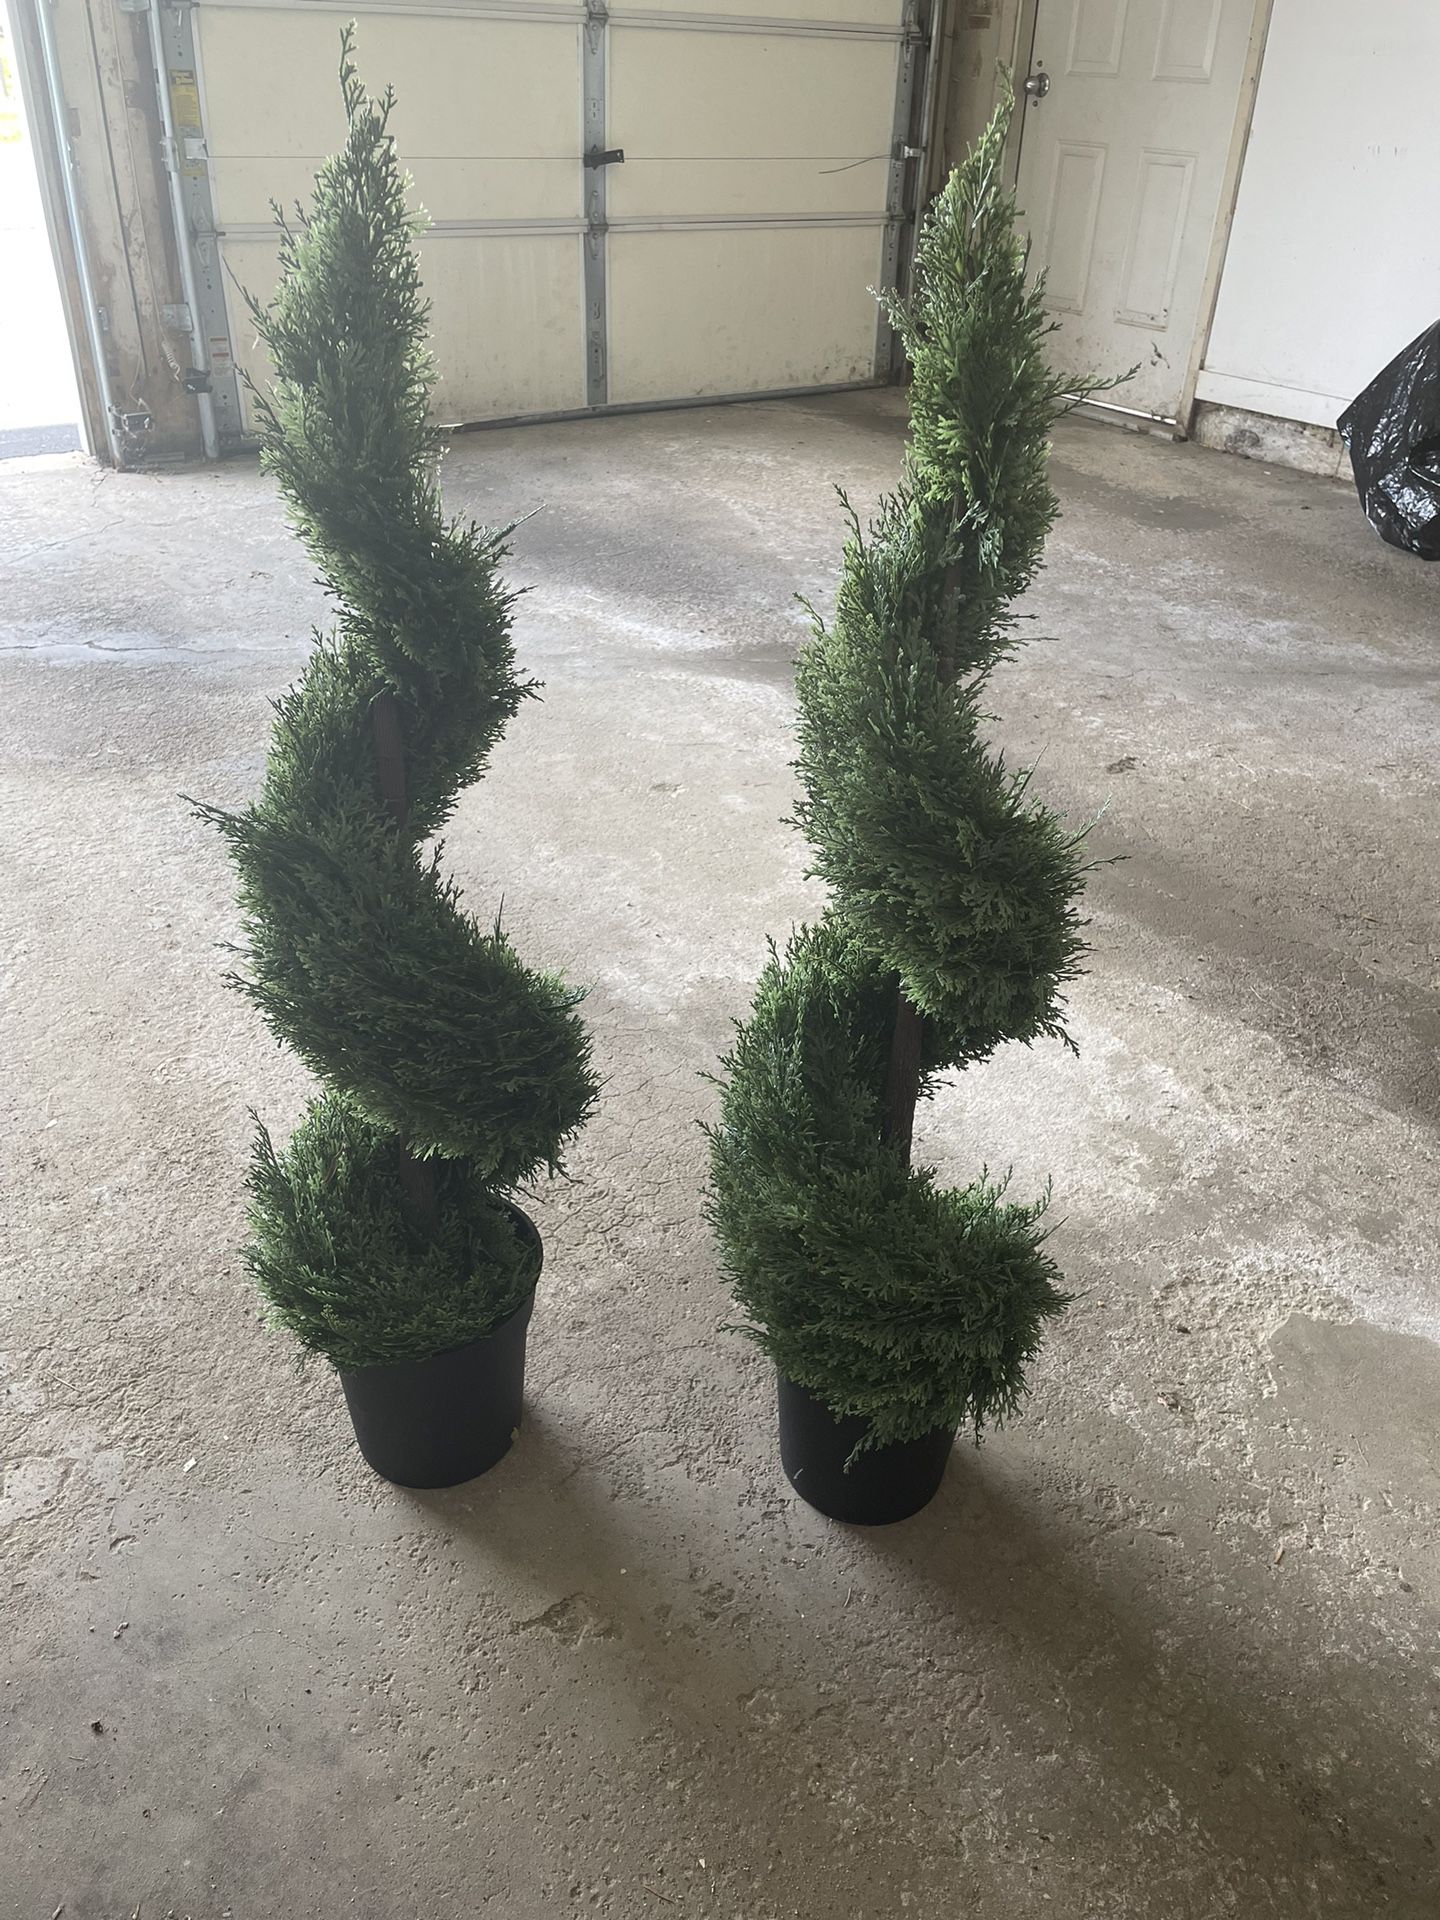 Two Artificial Decorative Planters 